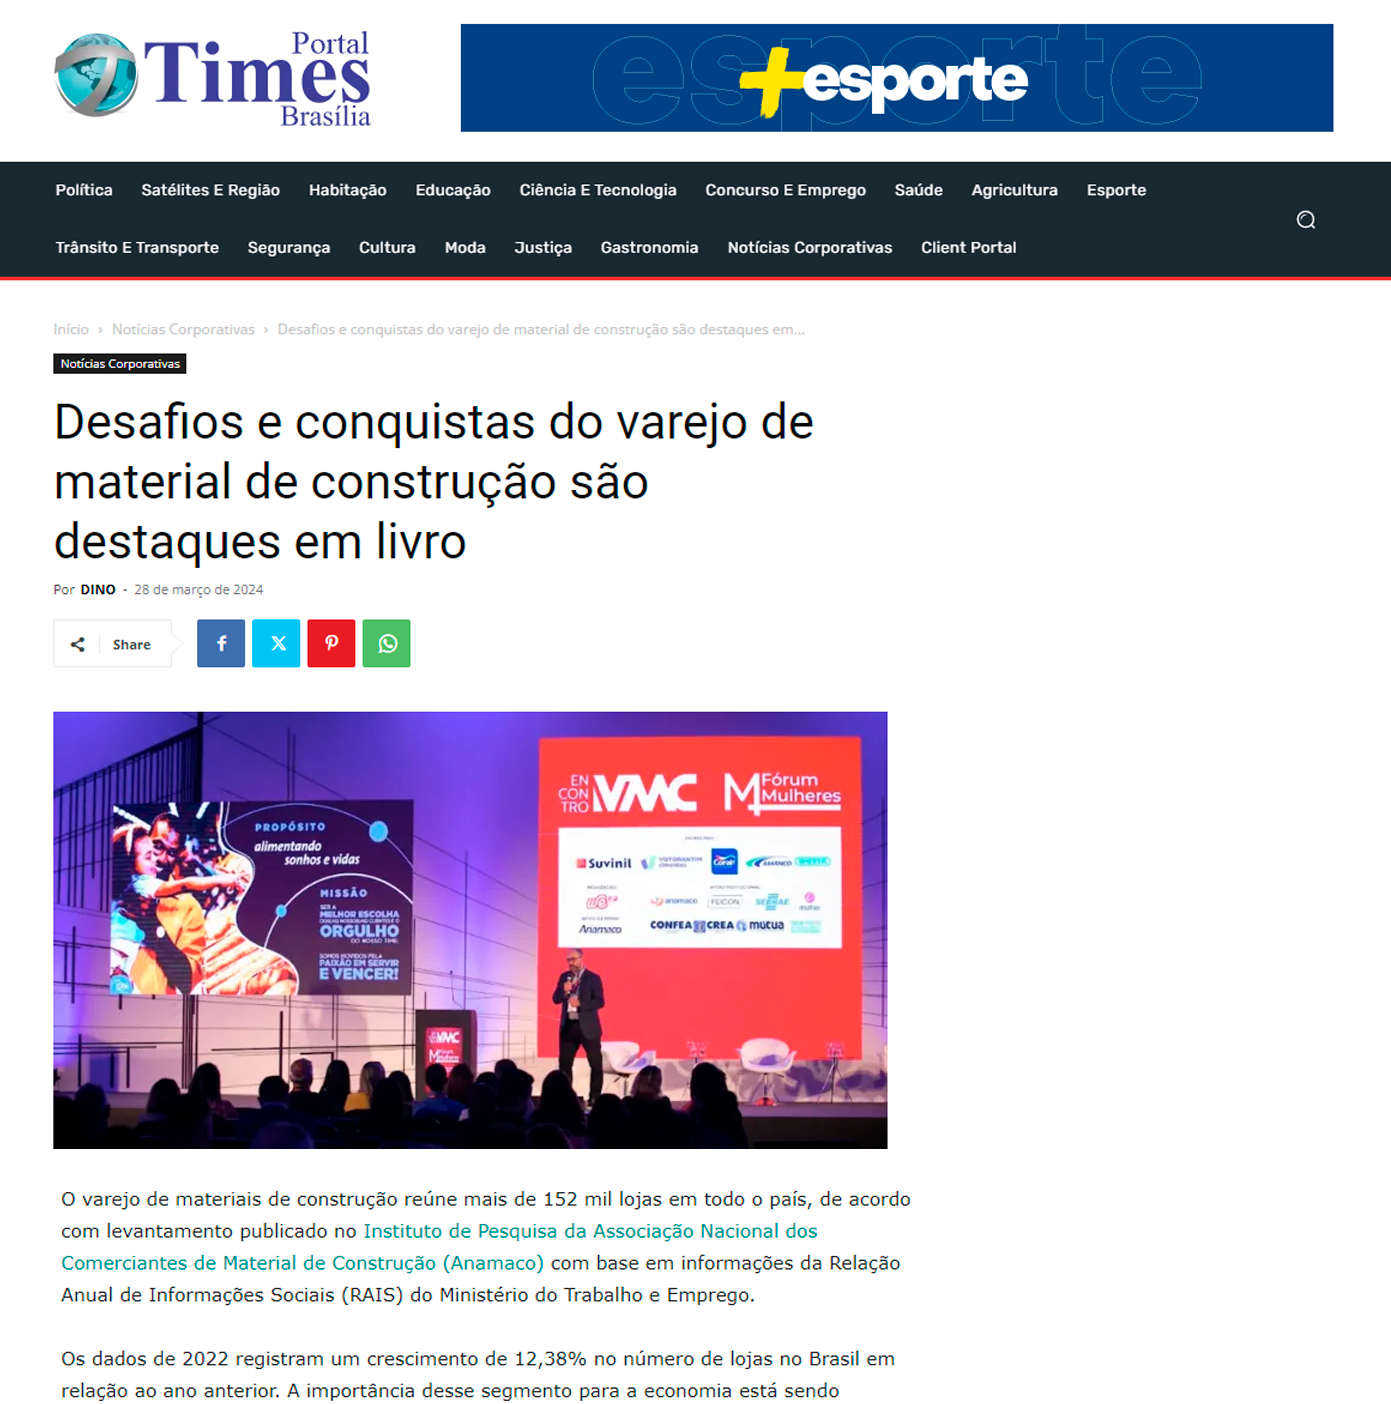 Portal Times Brasília